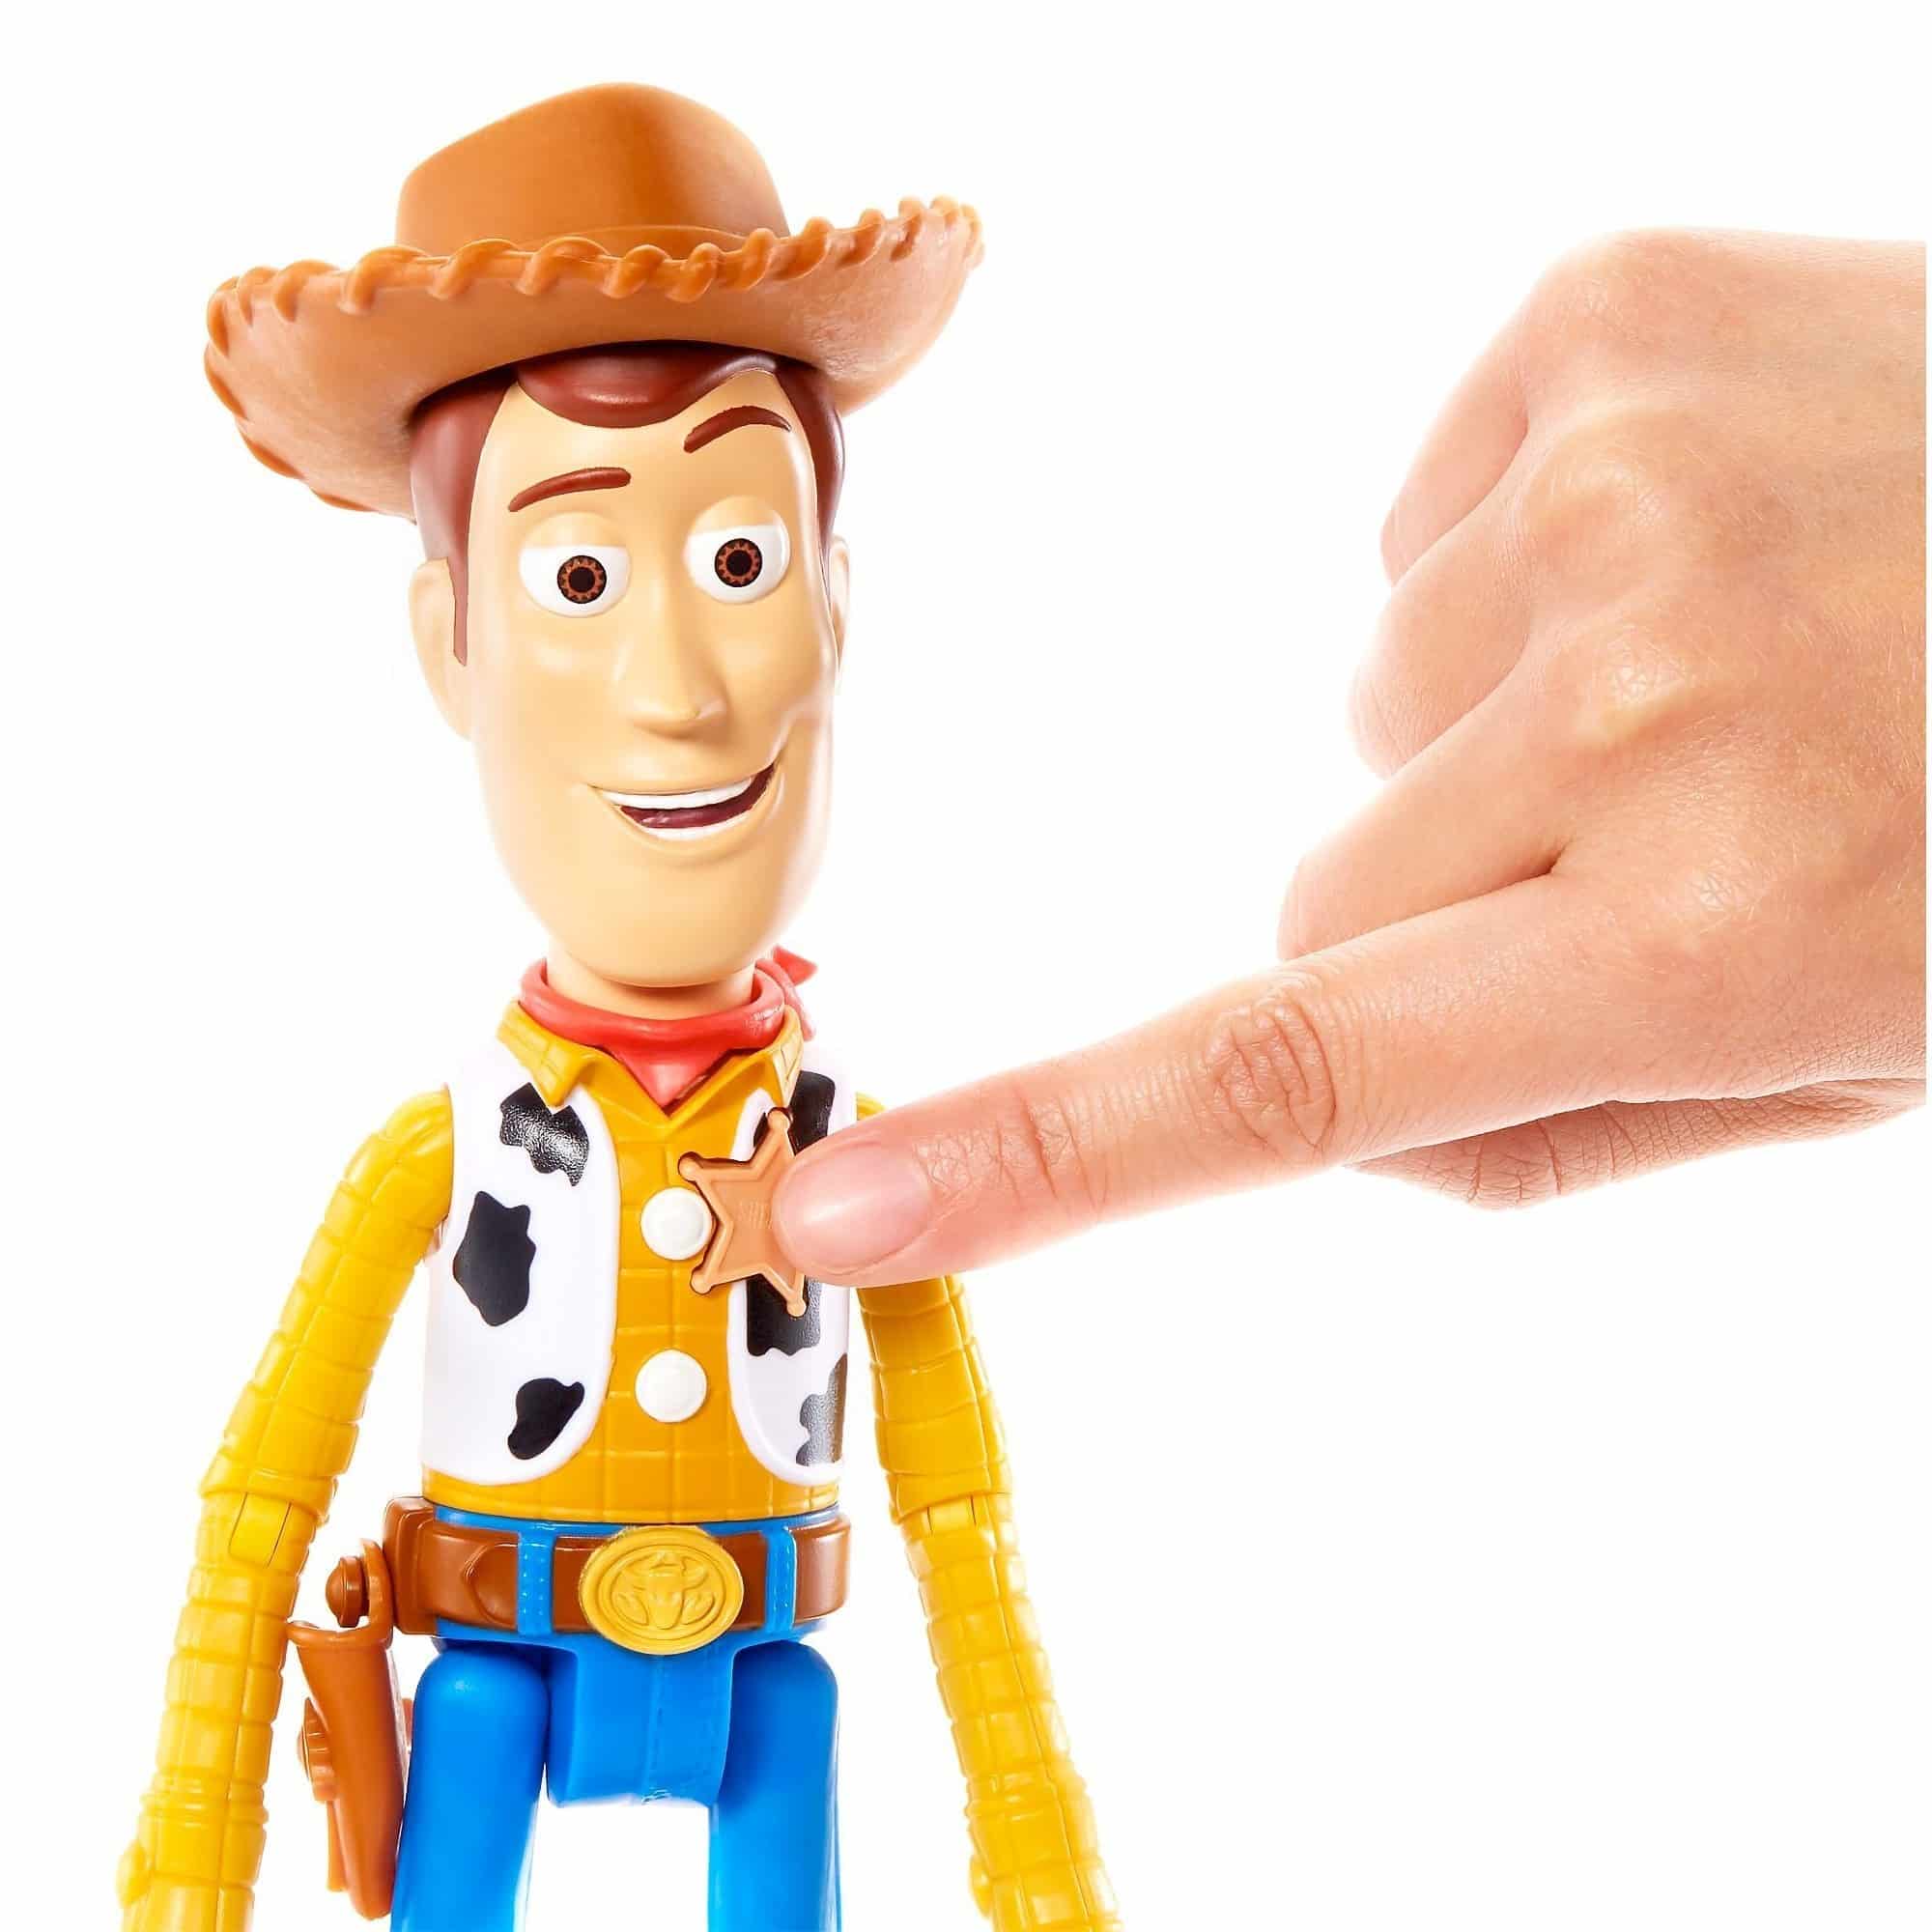 Toy Story 4 - True Talkers - Woody